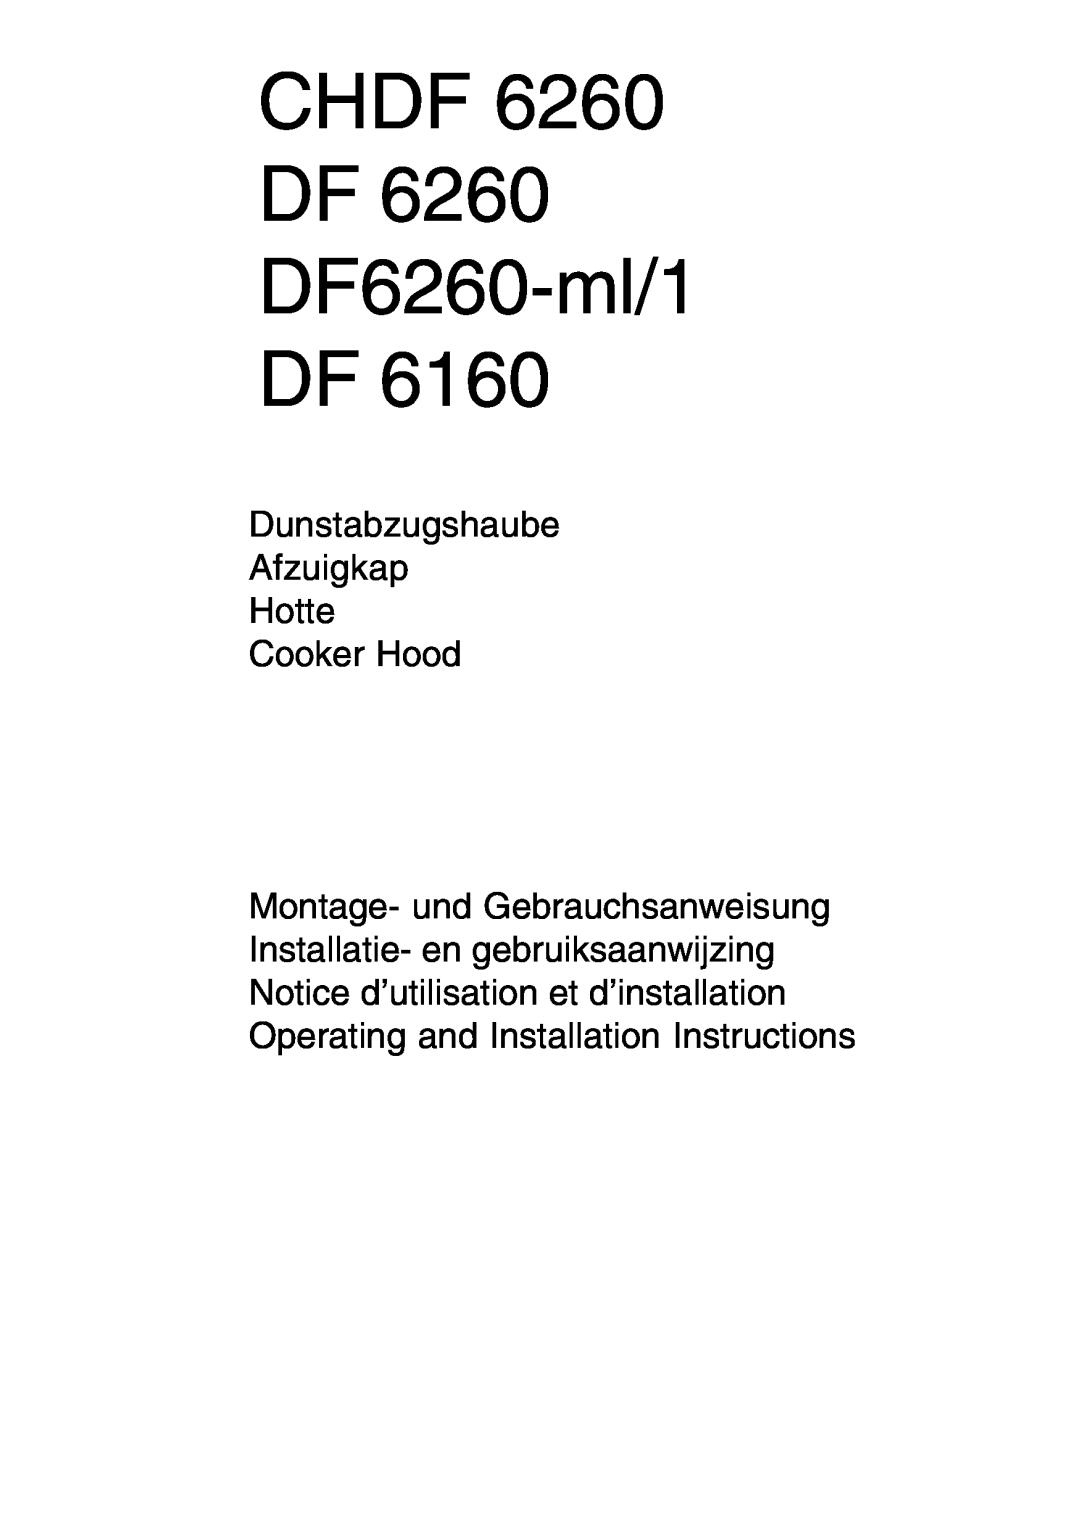 AEG DF 6260, DF 6160 installation instructions CHDF DF DF6260-ml/1 DF, Dunstabzugshaube Afzuigkap Hotte Cooker Hood 